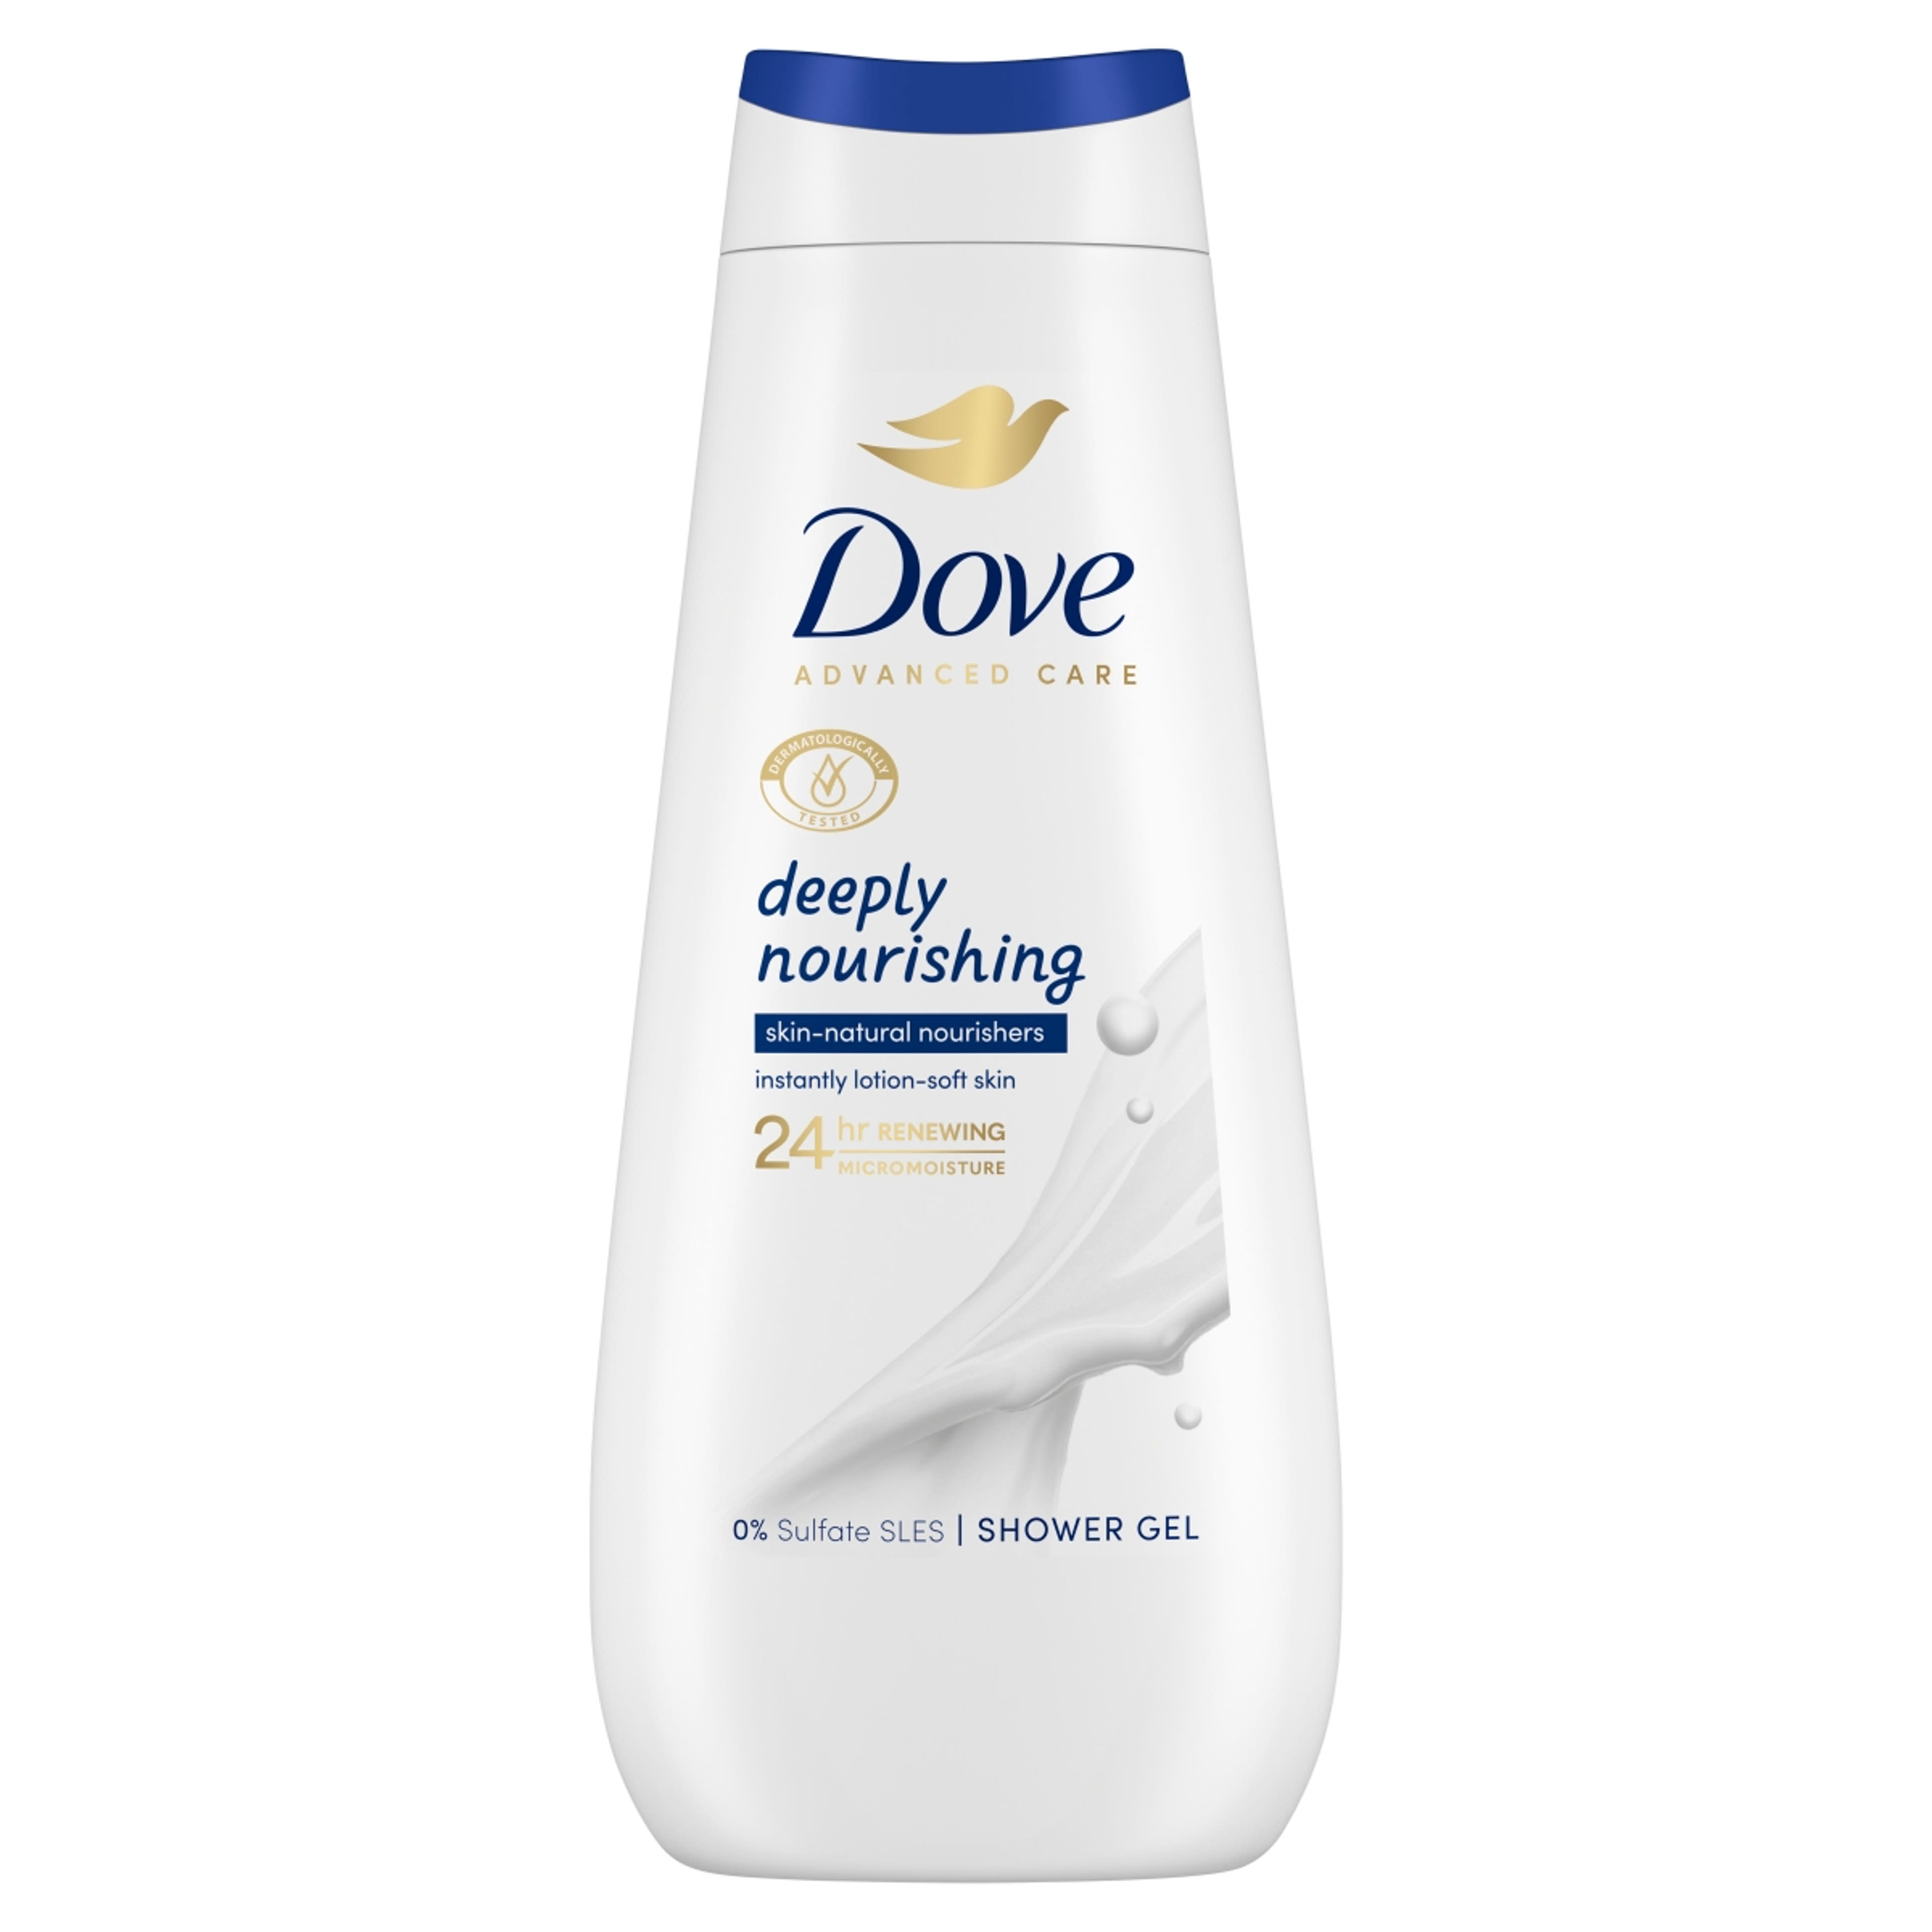 Dove Advanced Care Deeply Nourishing krémtusfürdő - 400 ml-1